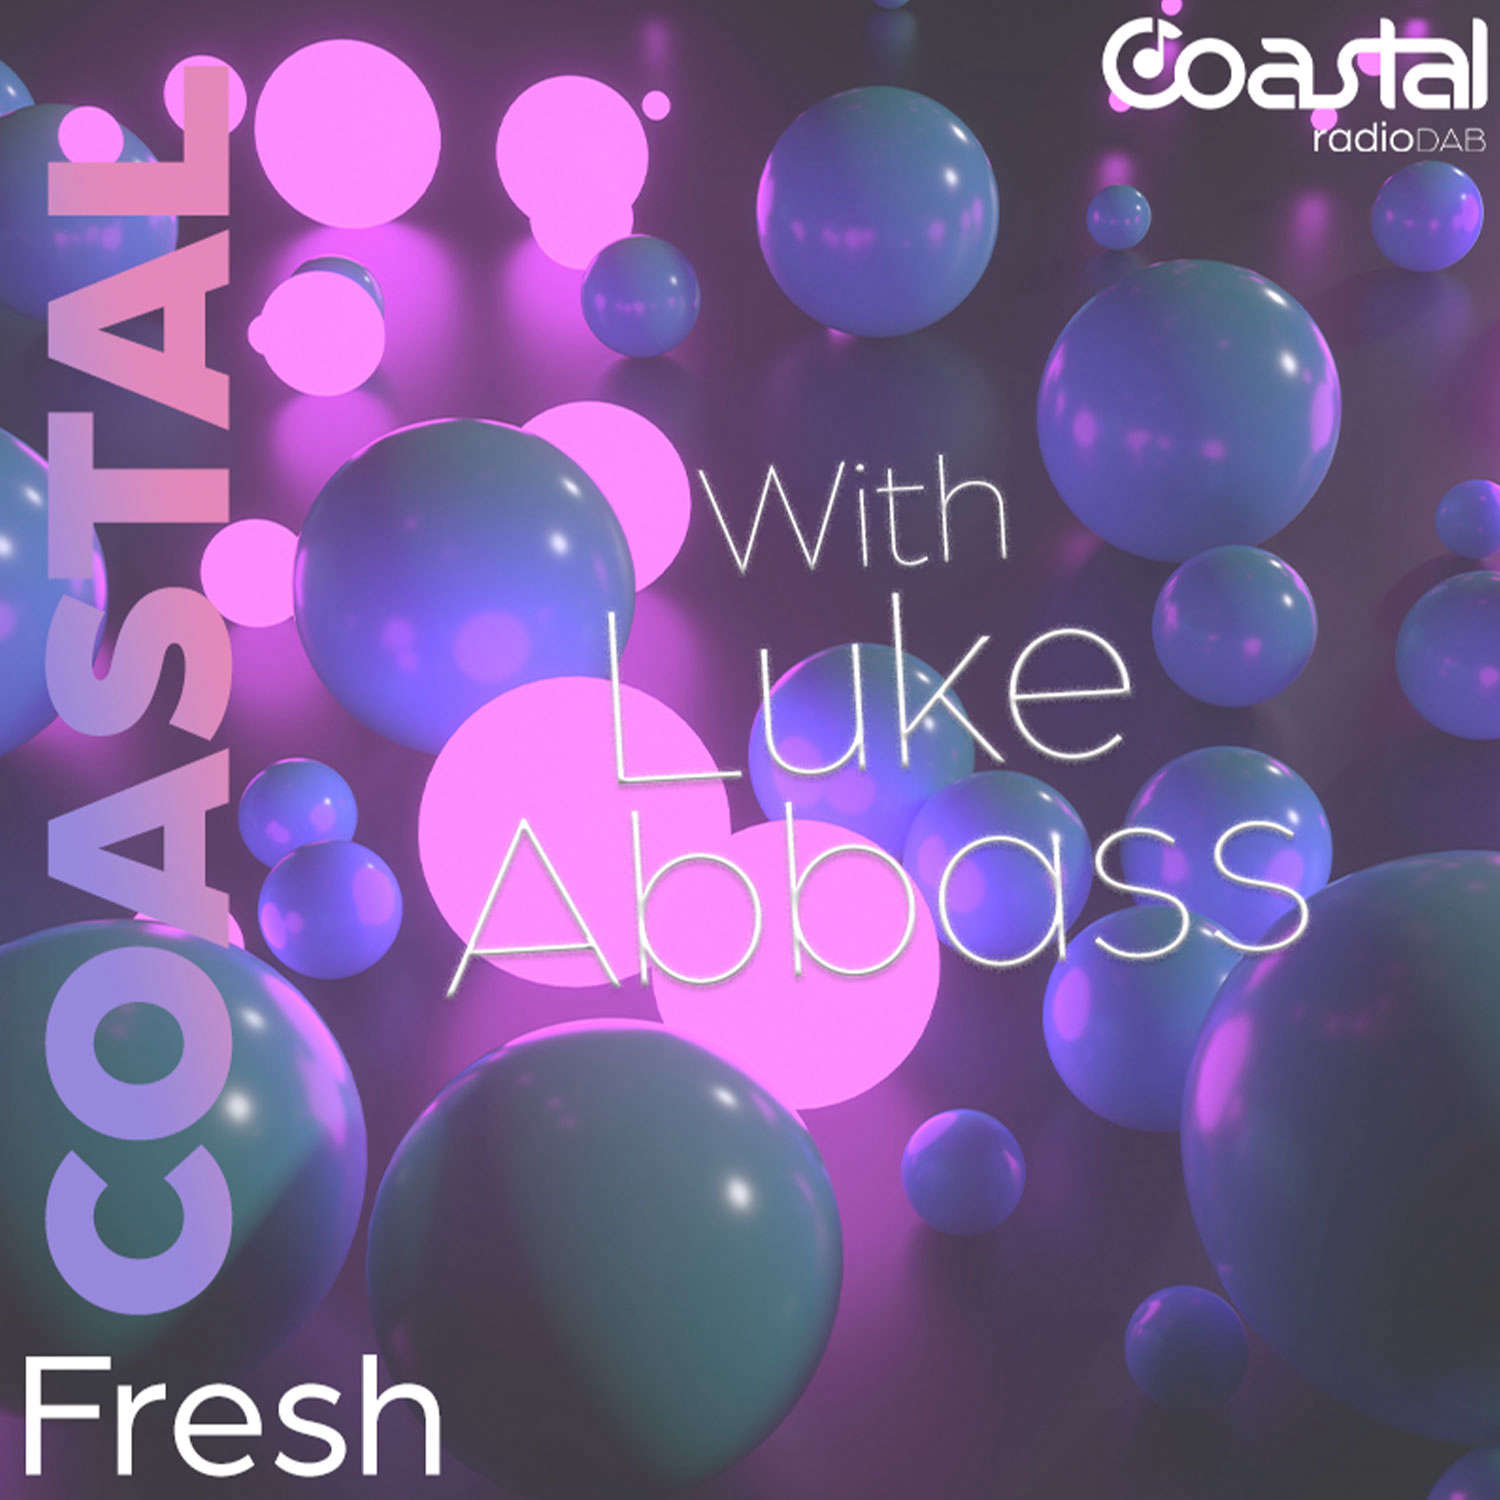 Coastal Fresh with Luke Abbass